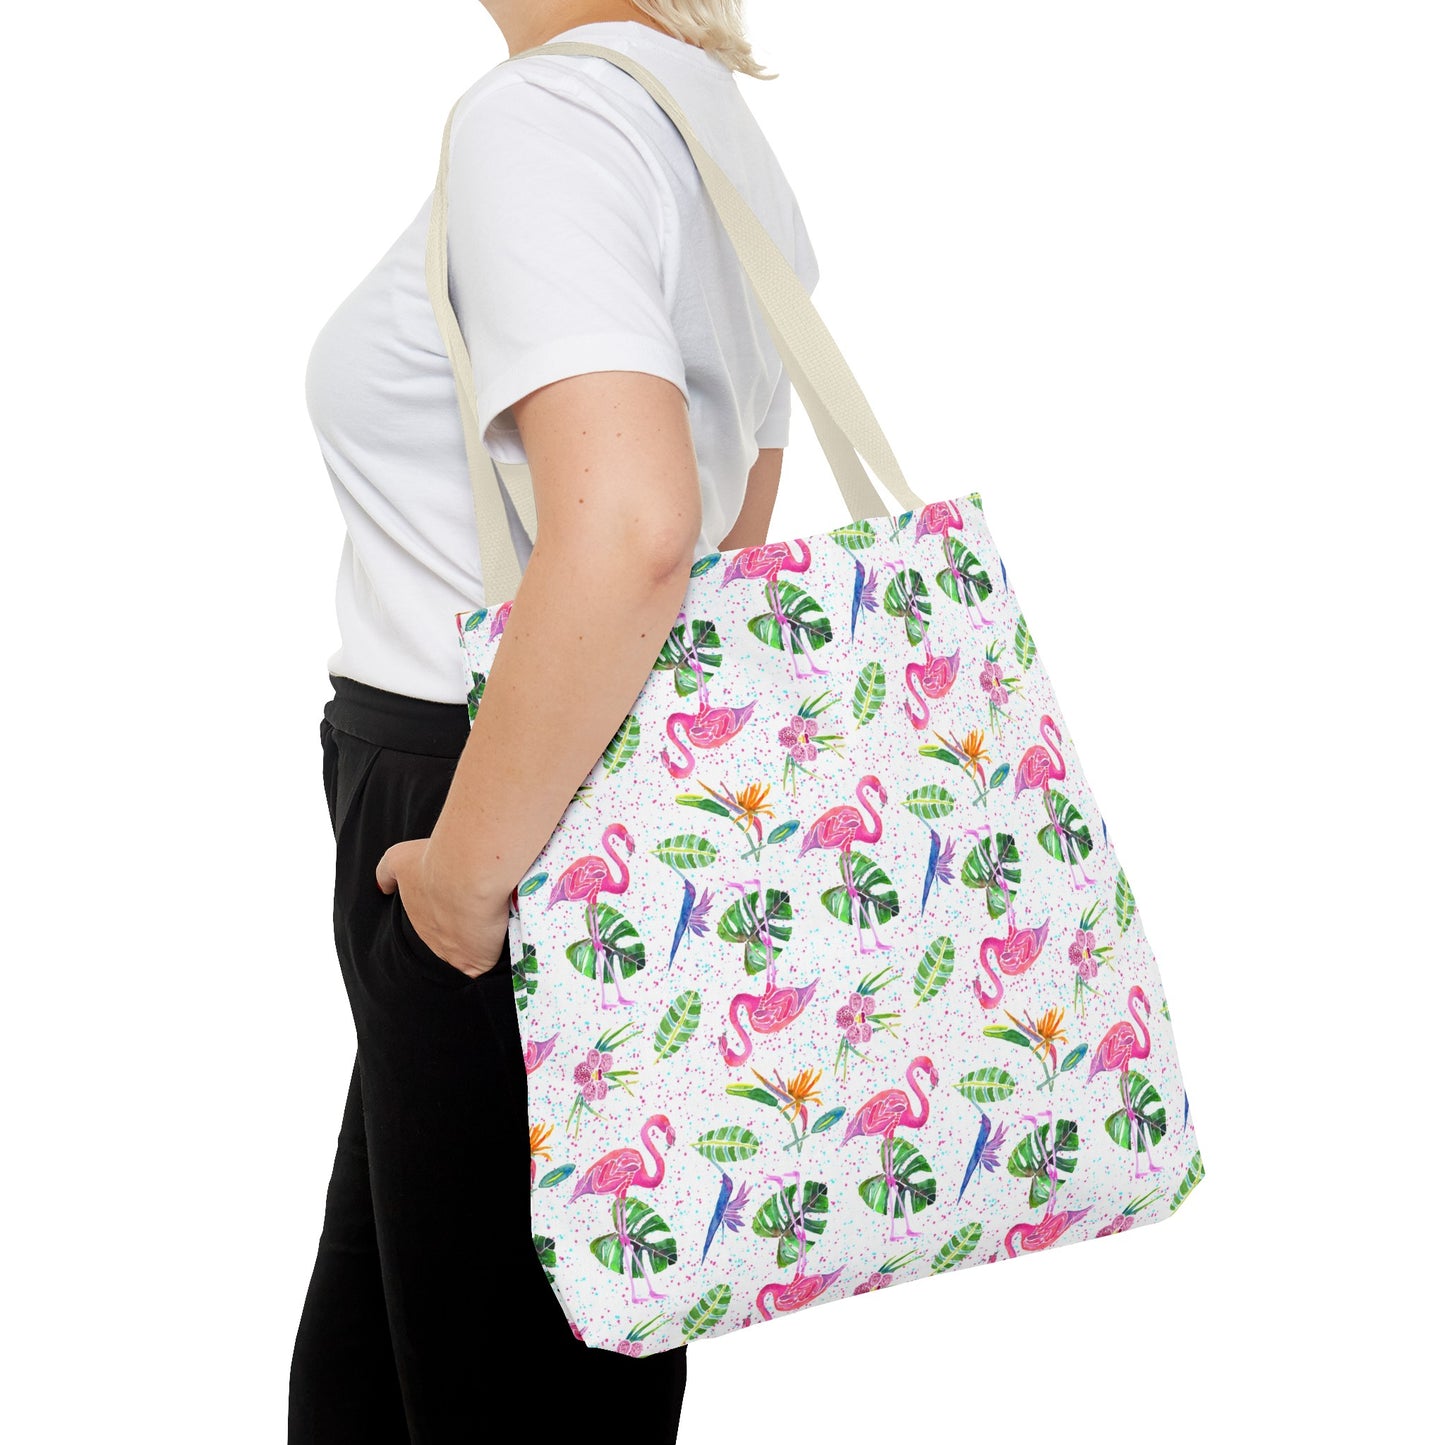 Flamingo Party Tote Bag